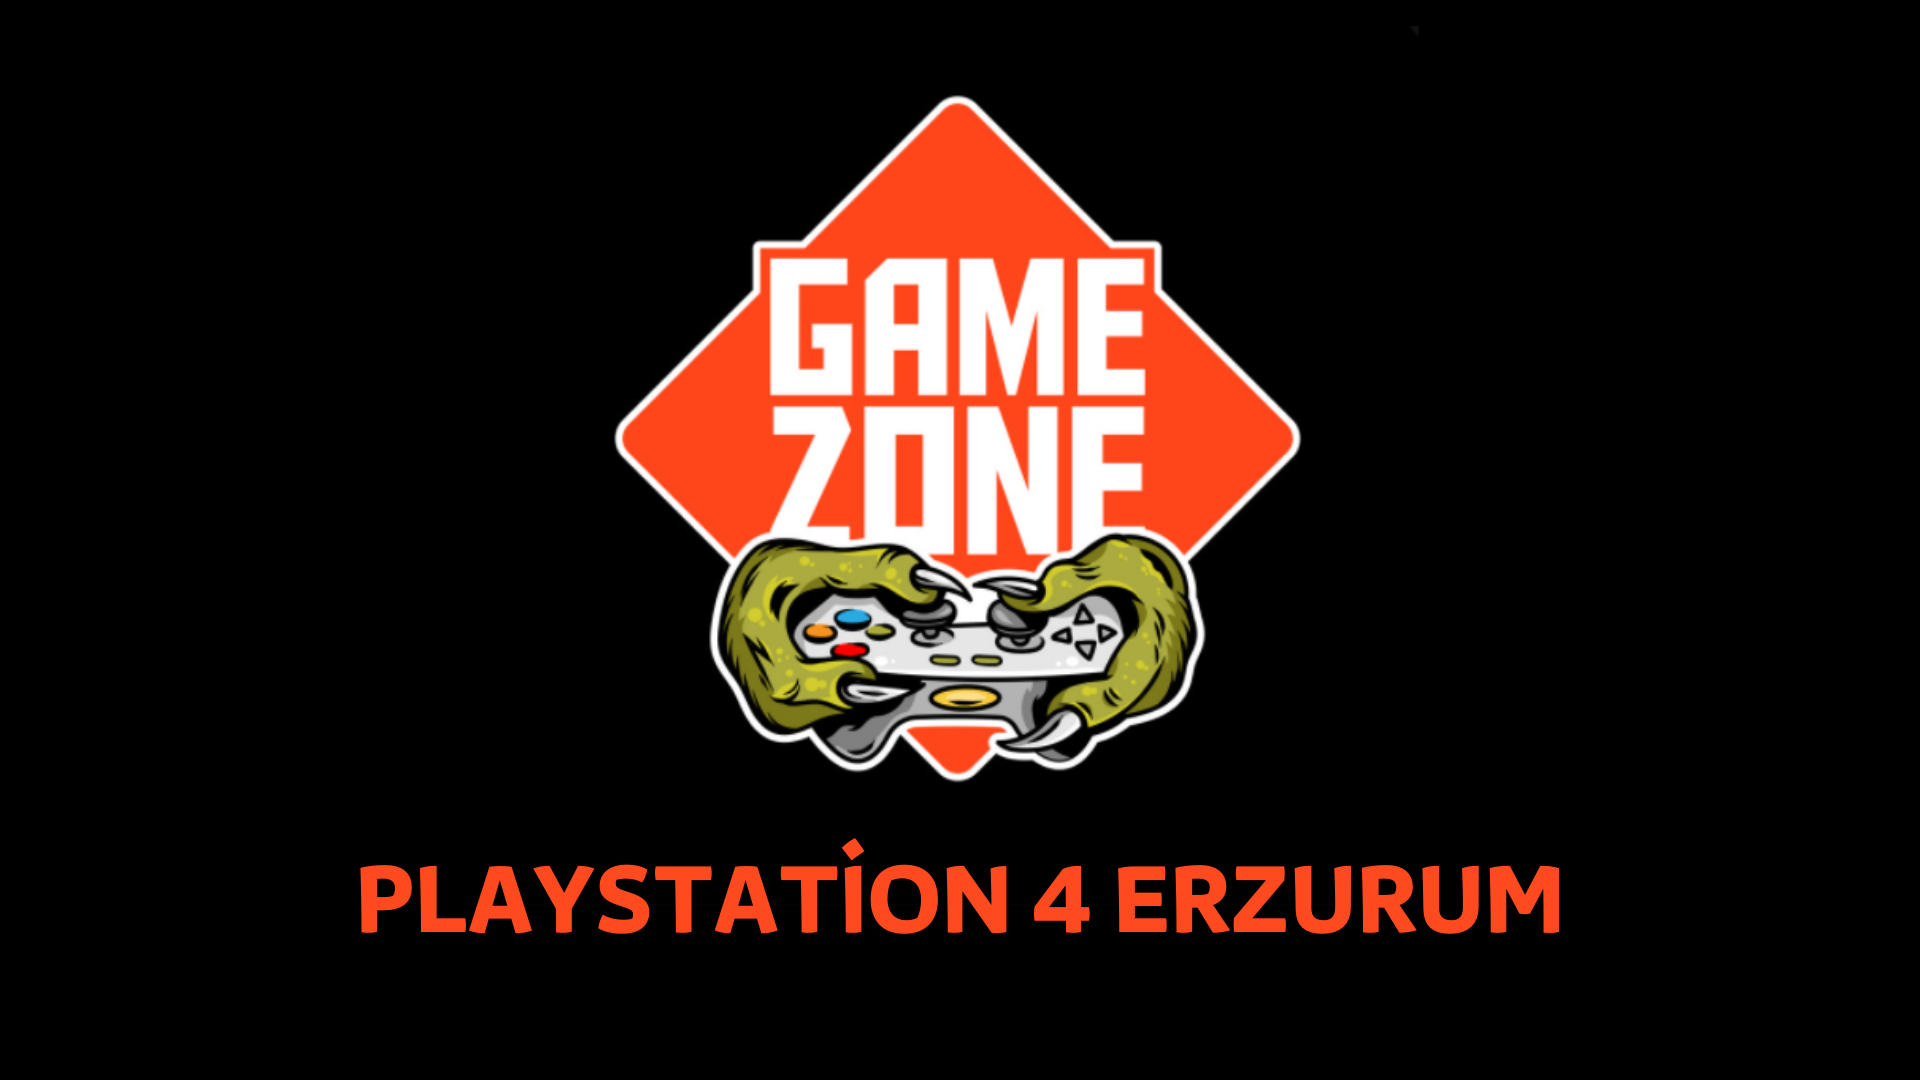 Playstation 4 Erzurum | GameZone Playstation